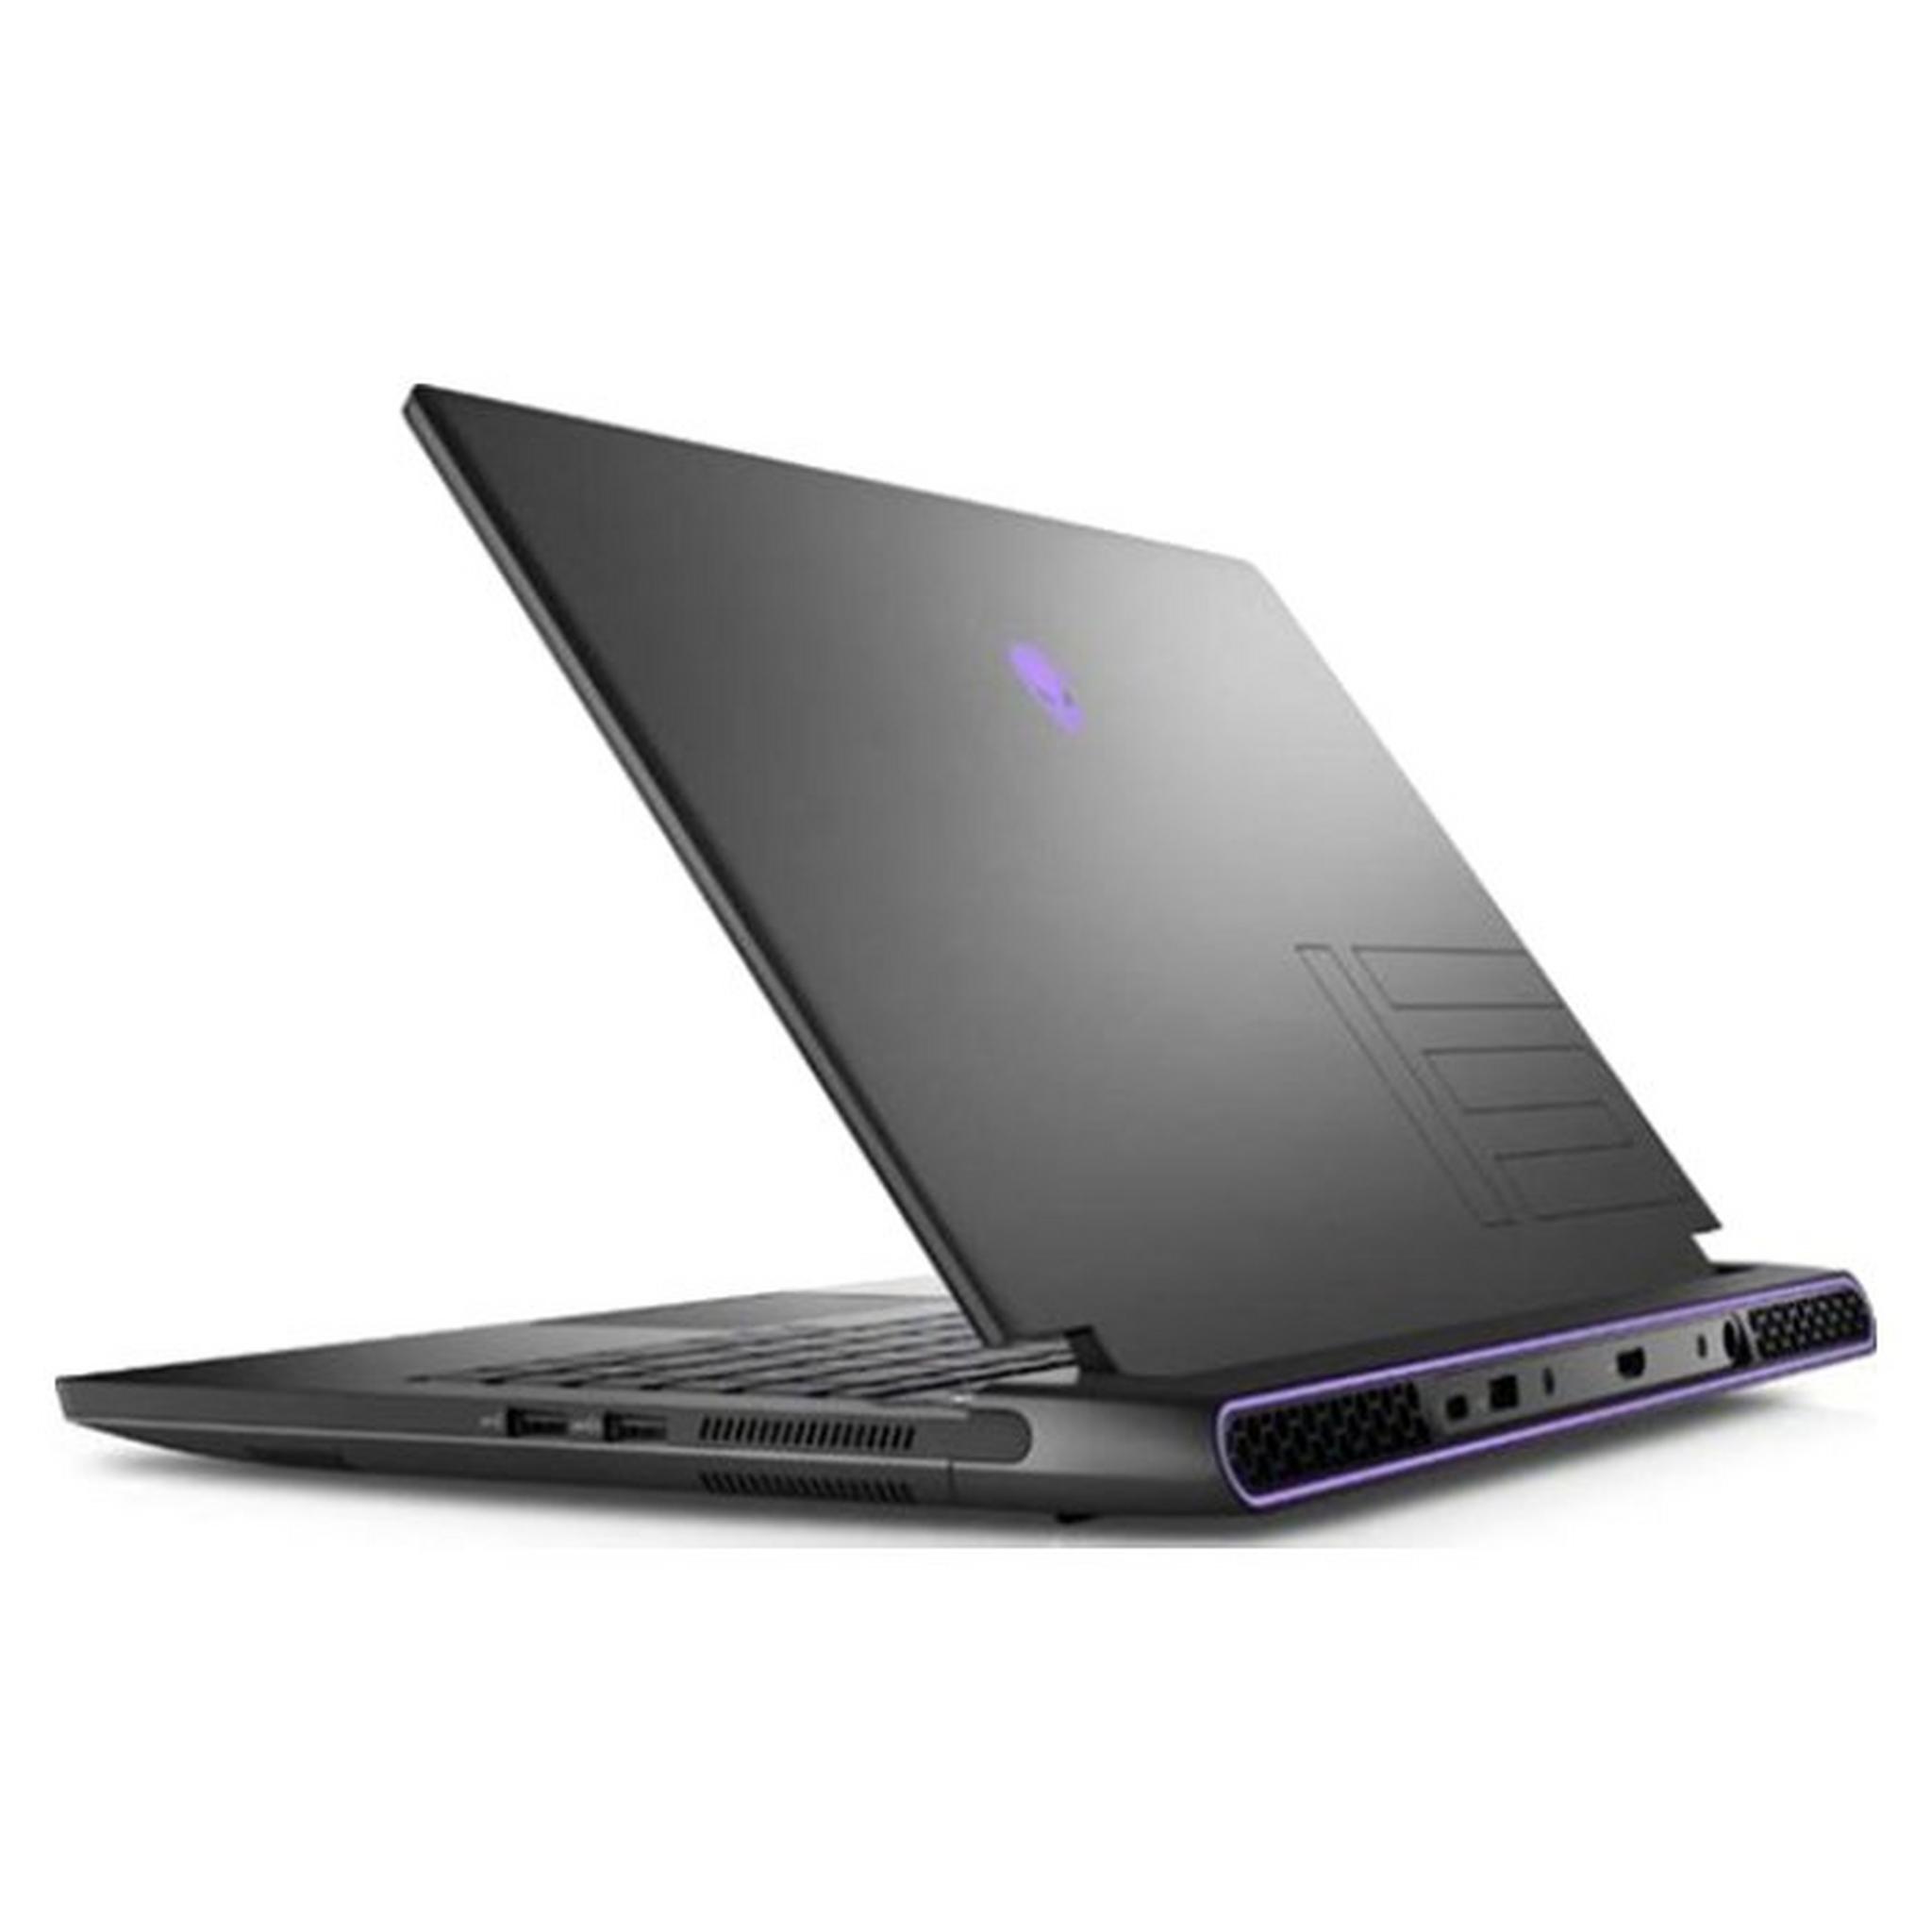 Dell Alienware m15 intel core i7 12th Gen, 16GB RAM, 512GB SSD, 16.5-inch Gaming Laptop